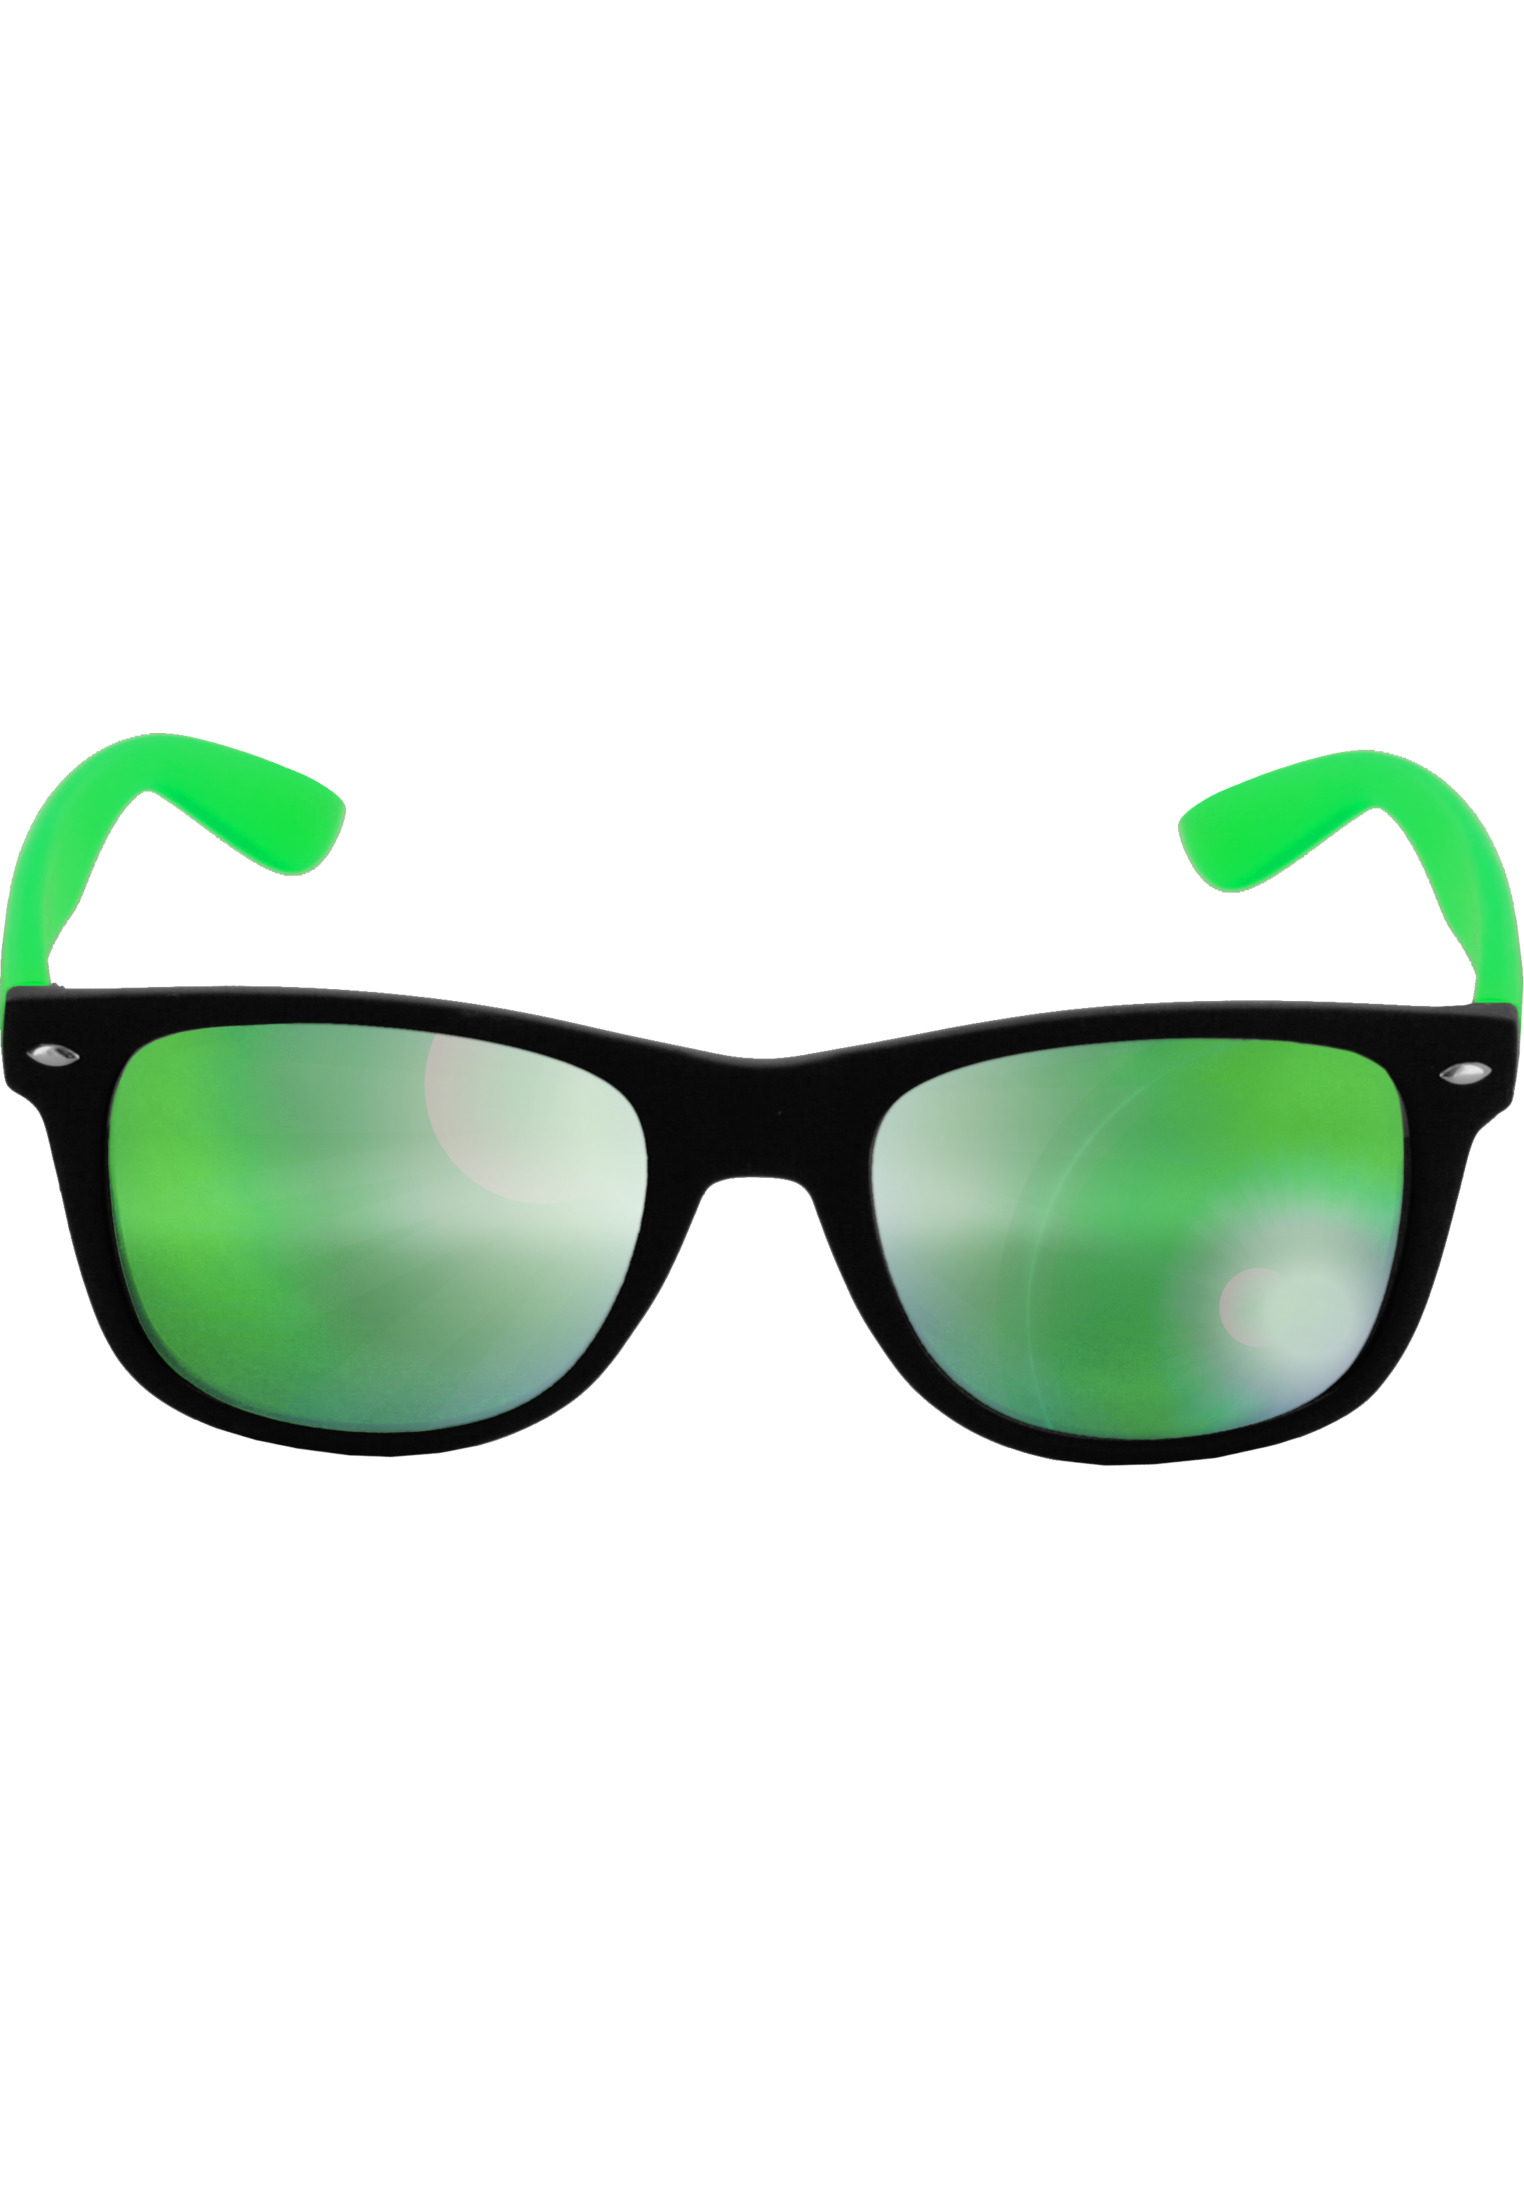 Sunglasses Likoma Mirror blk/lgr